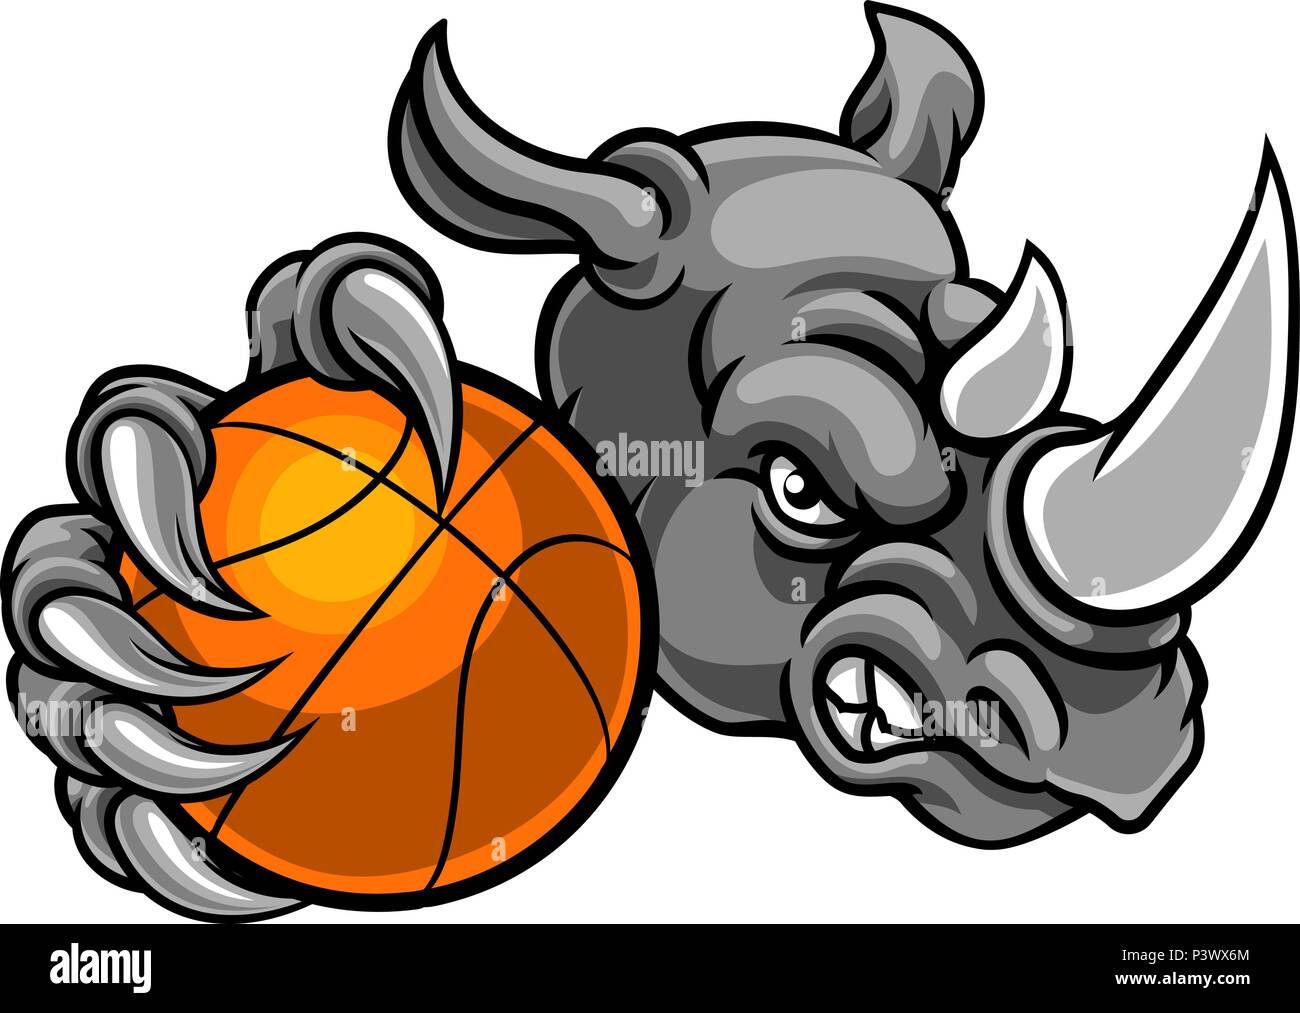 Rhino Holding Basketball Ball Mascot Stock Vector